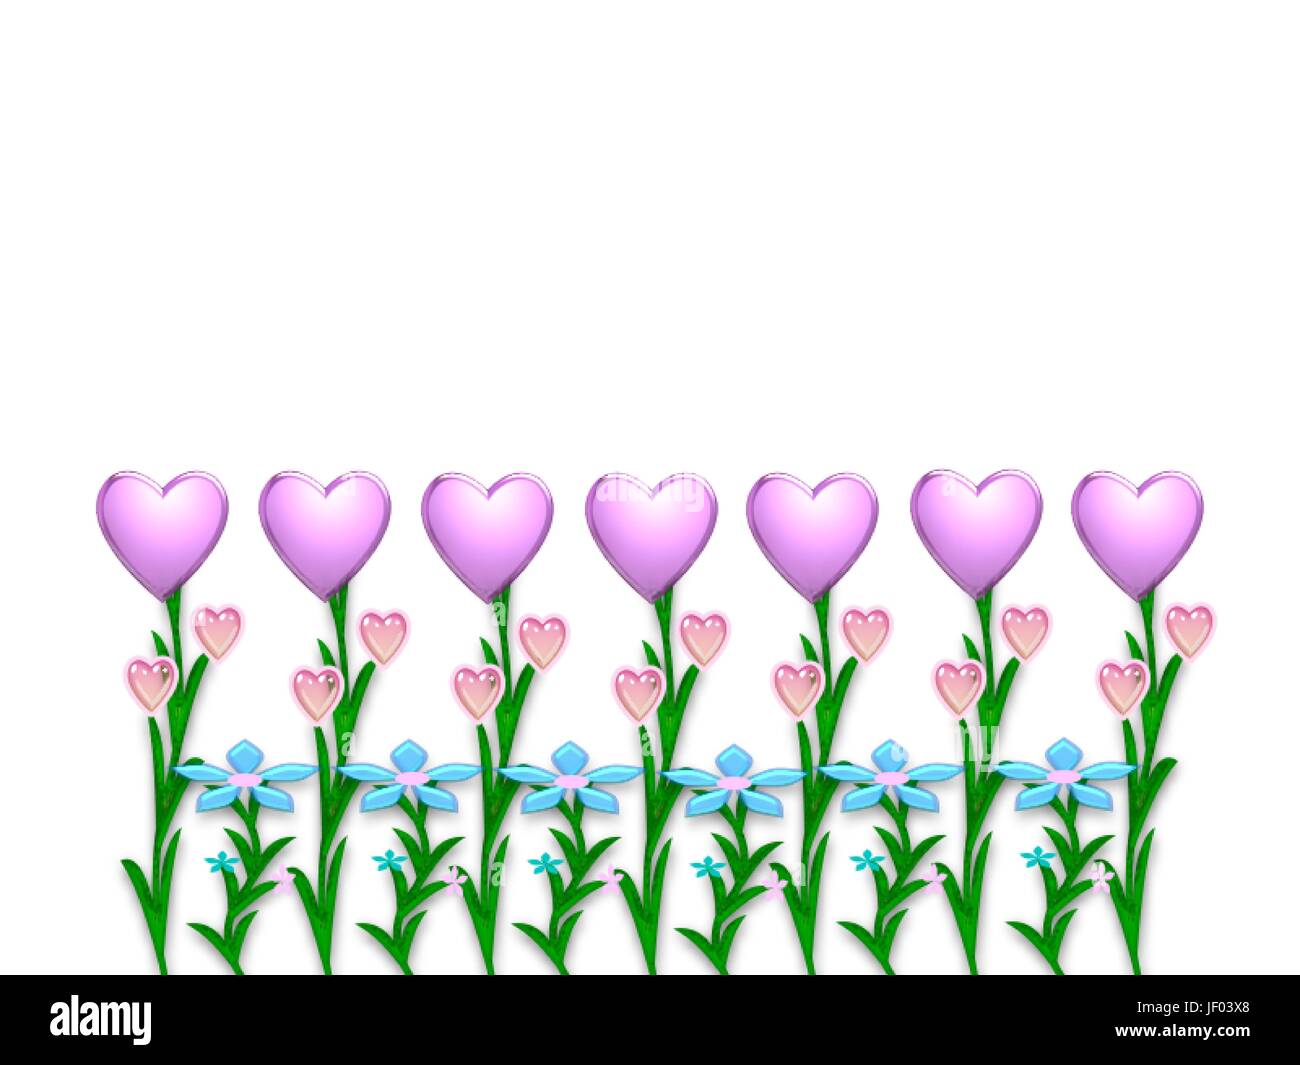 row, hearts, vector, replication, reproduction, art, colour, flower, plant, Stock Vector